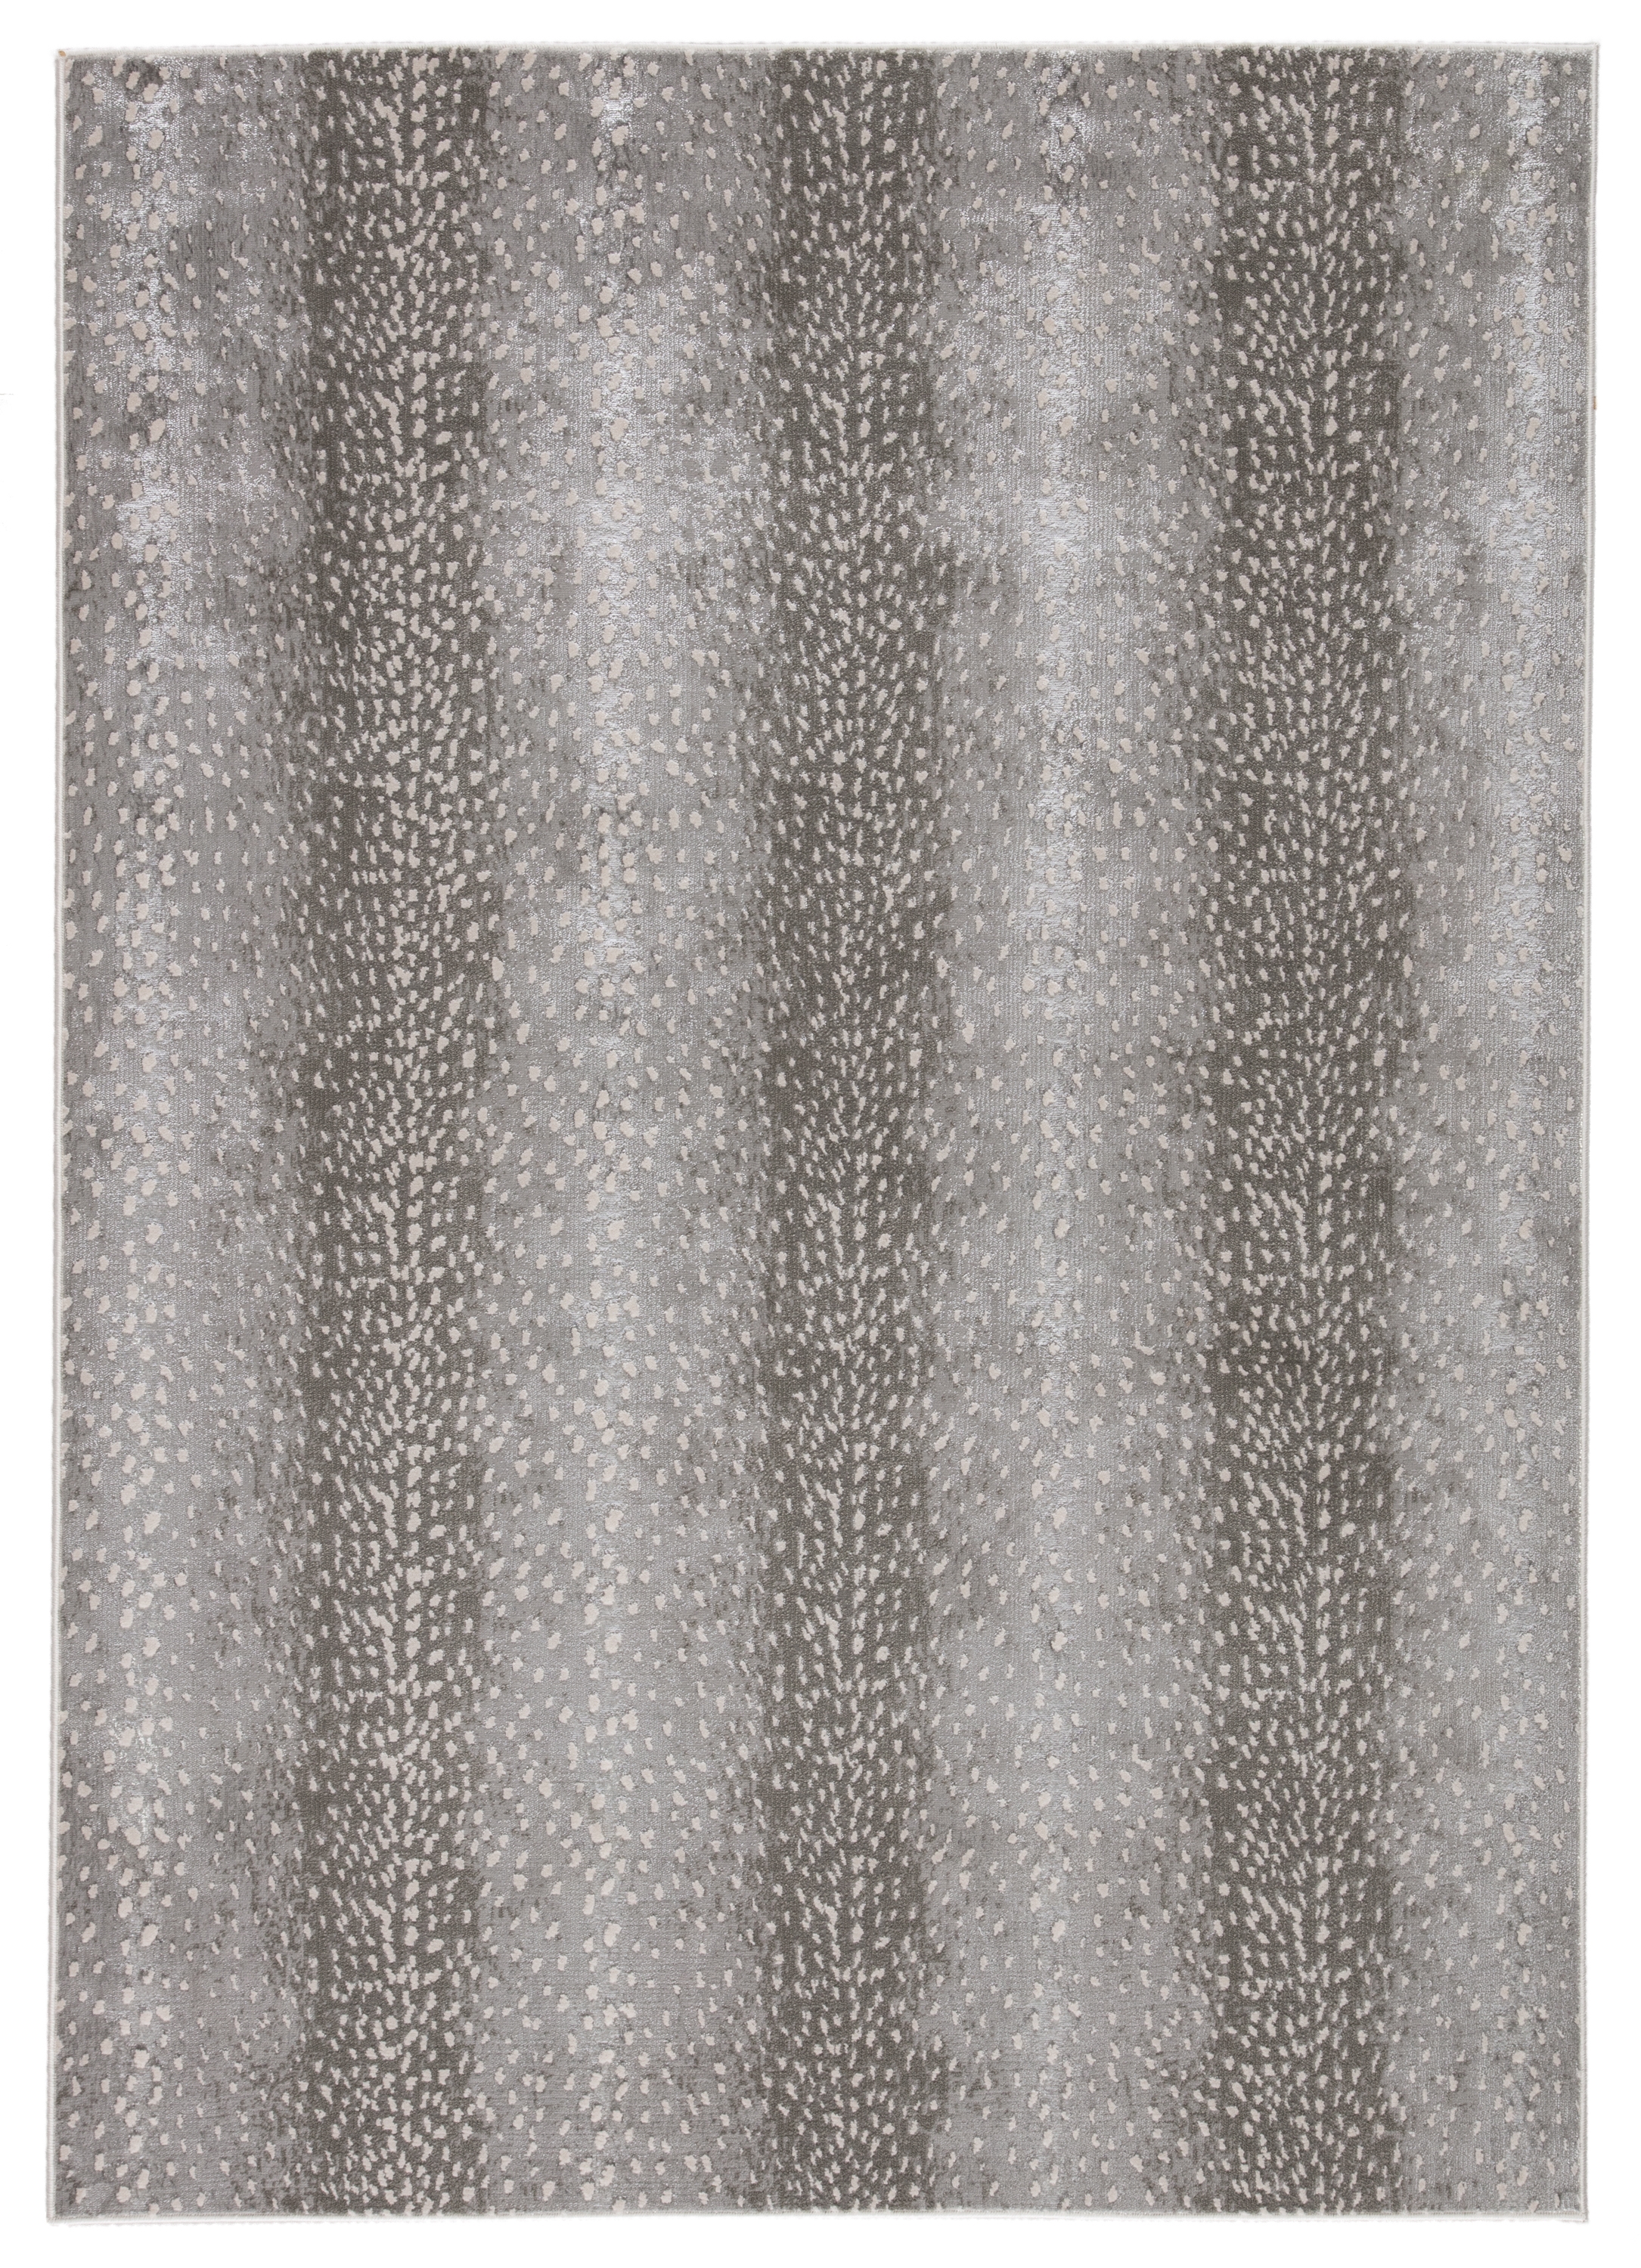 Ibira Rug, 7'10" x 10'6", Gray - Image 0